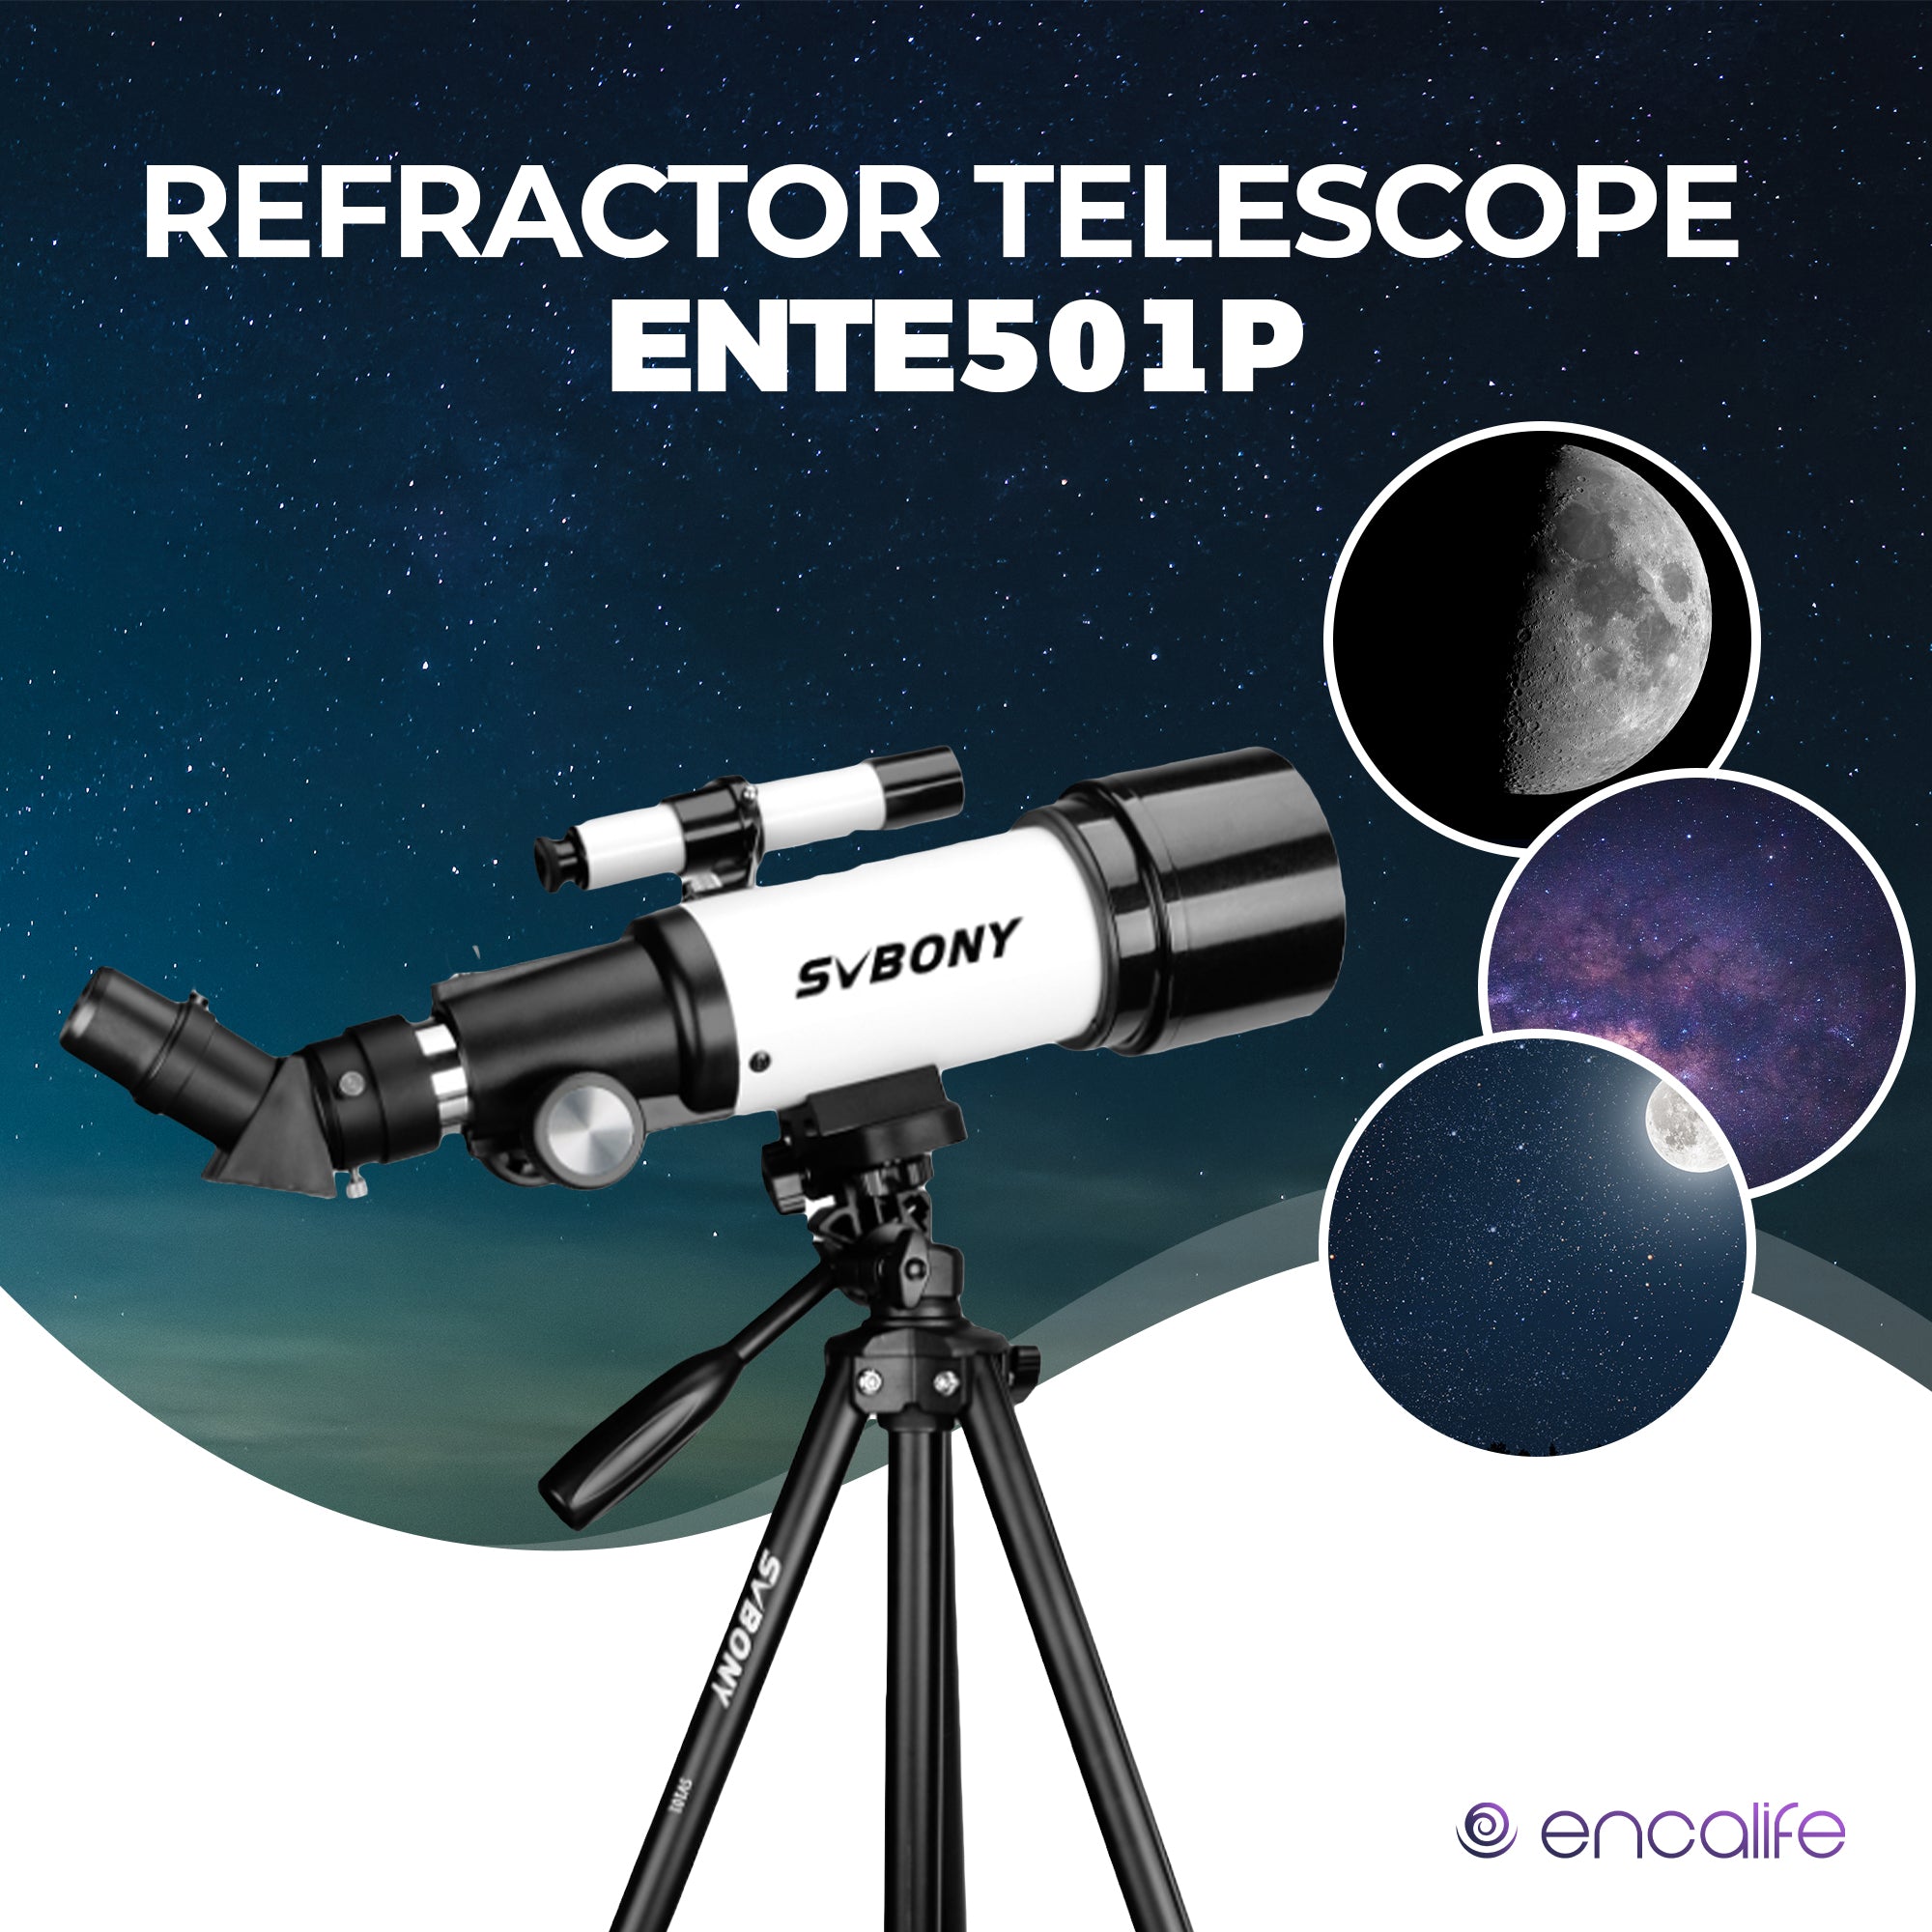 Refractor Telescope ENTE501P image